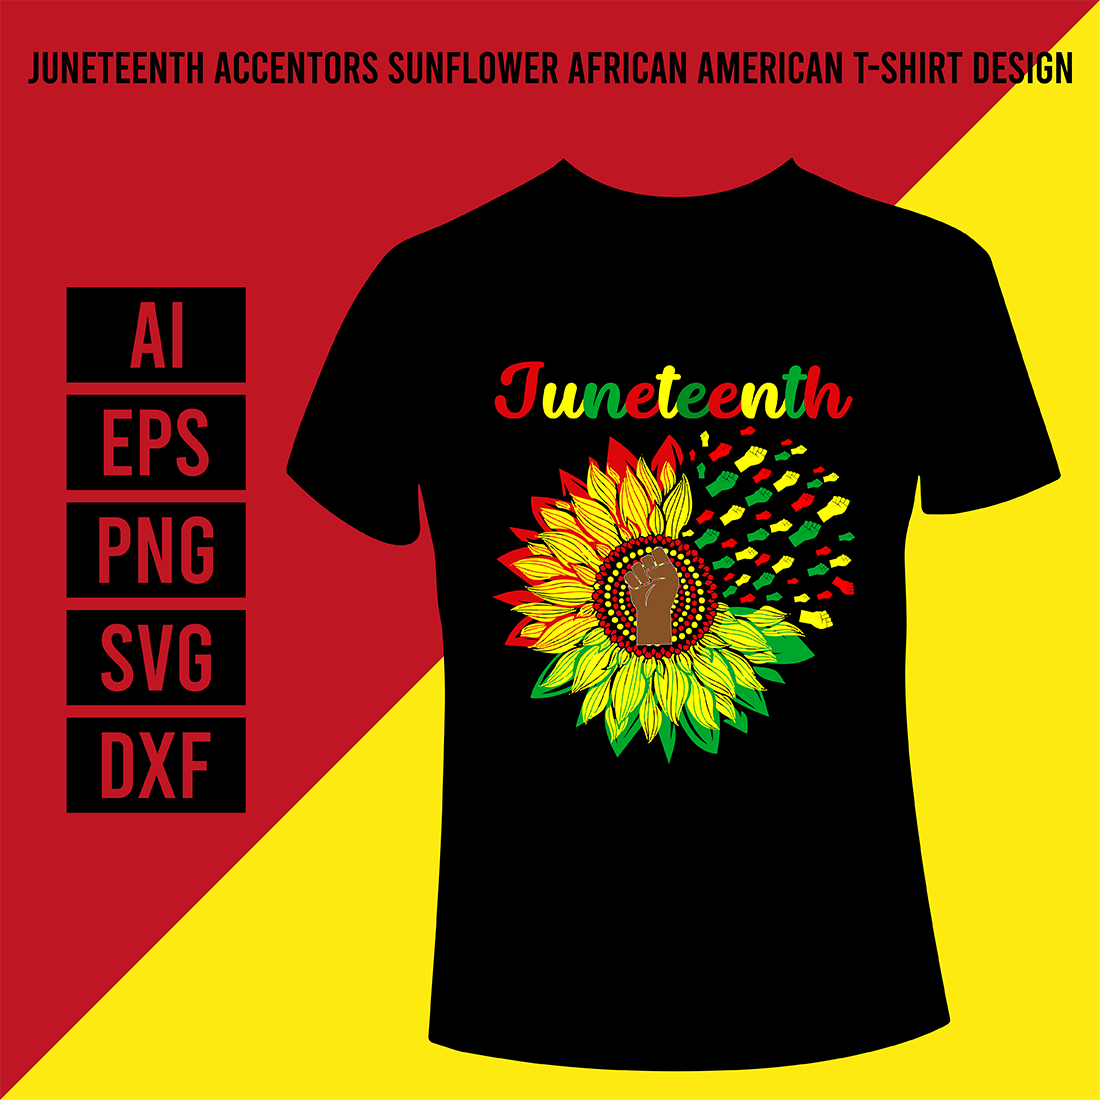 Juneteenth Accentors Sunflower African American T-Shirt Design cover image.